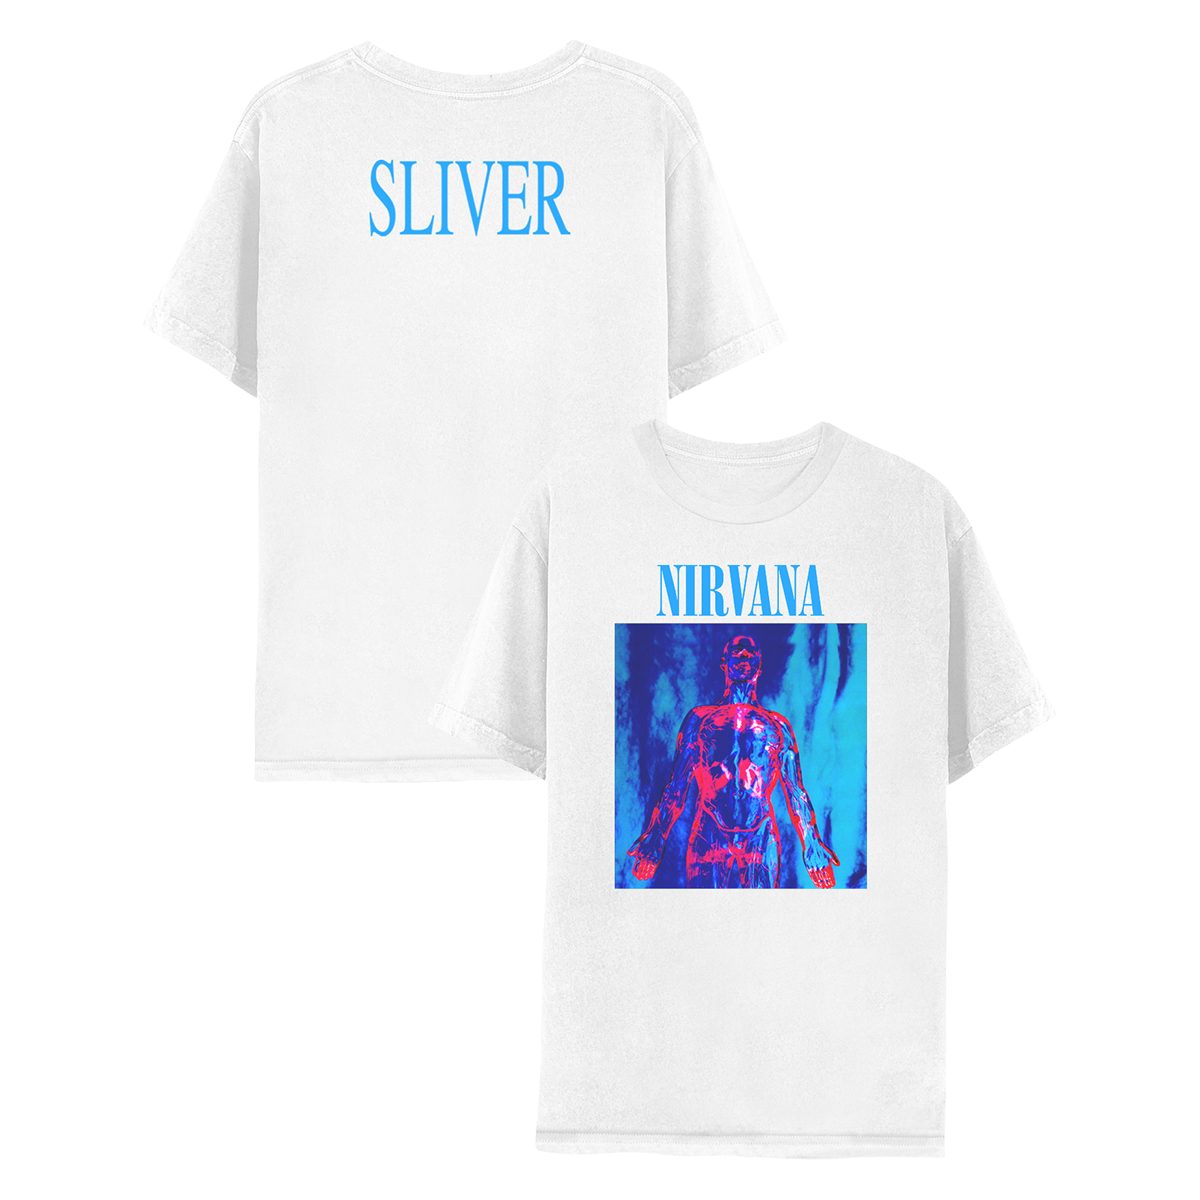 nirvana sliver t shirt